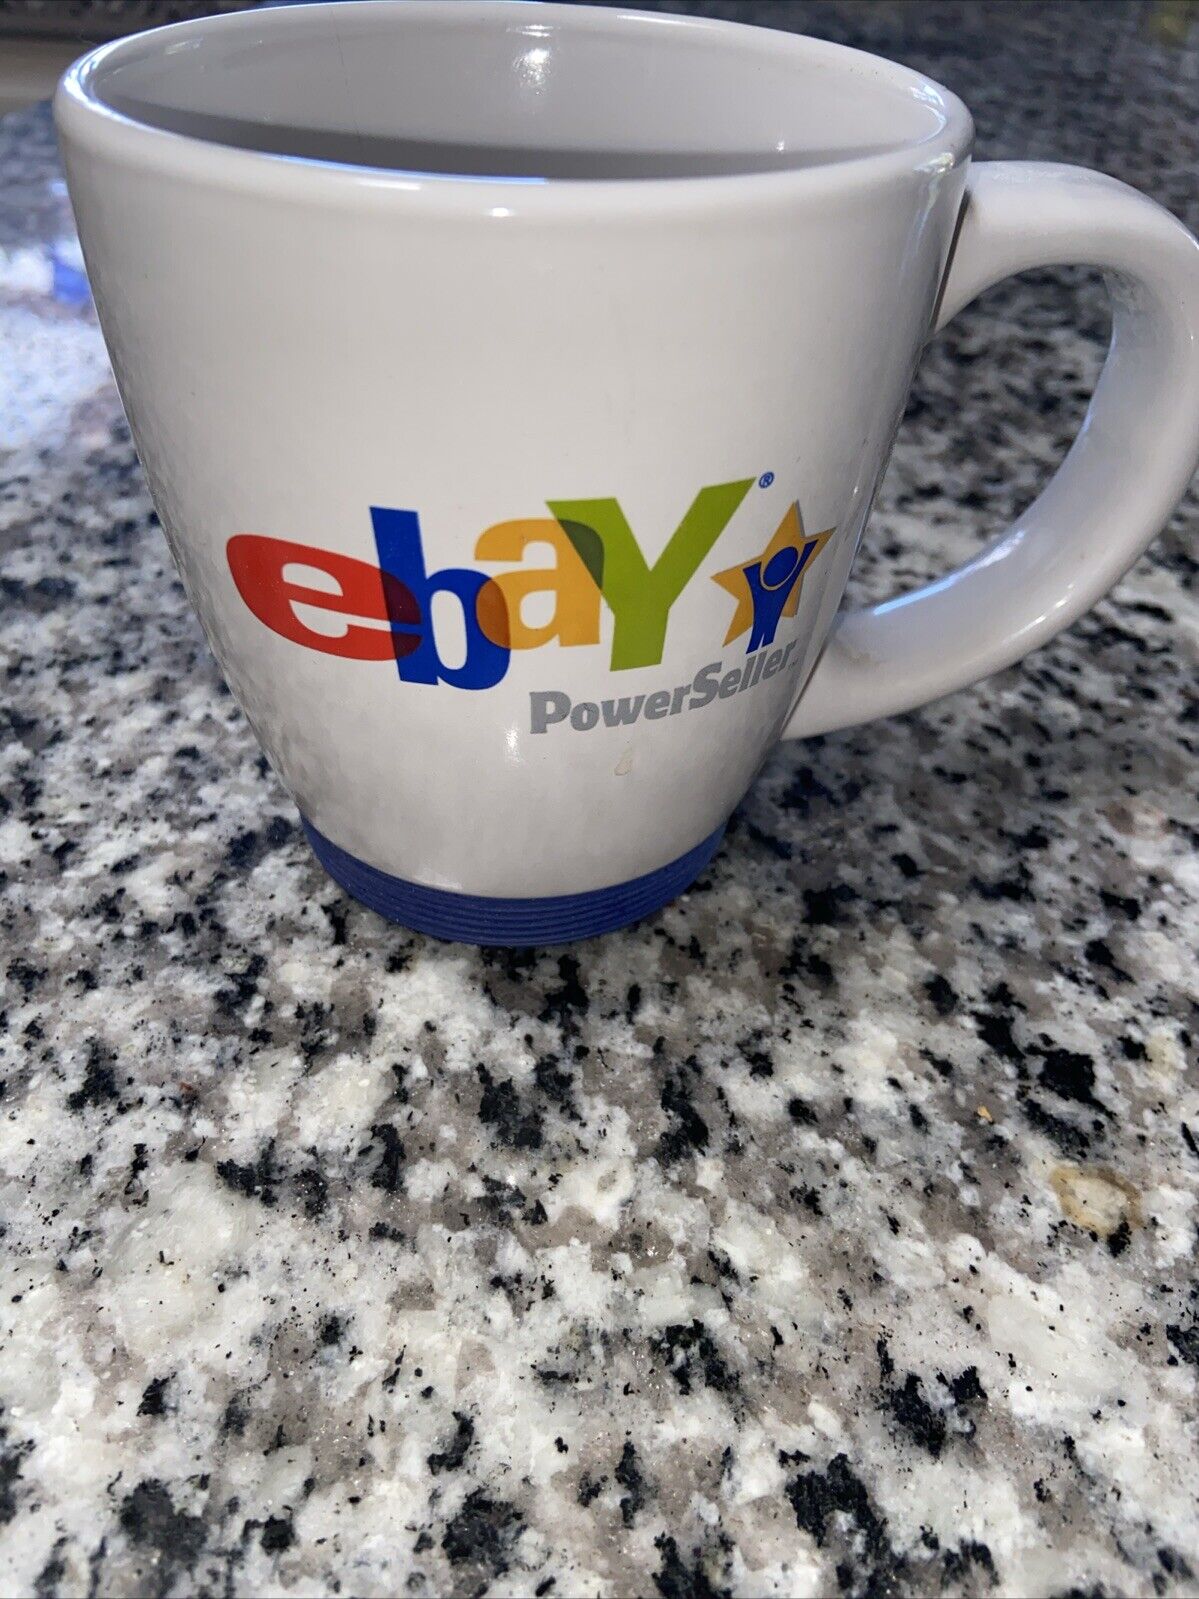 Ebay PowerSeller Recognized Respected Rewarded Coffee Mug Tea Cup 14 Oz